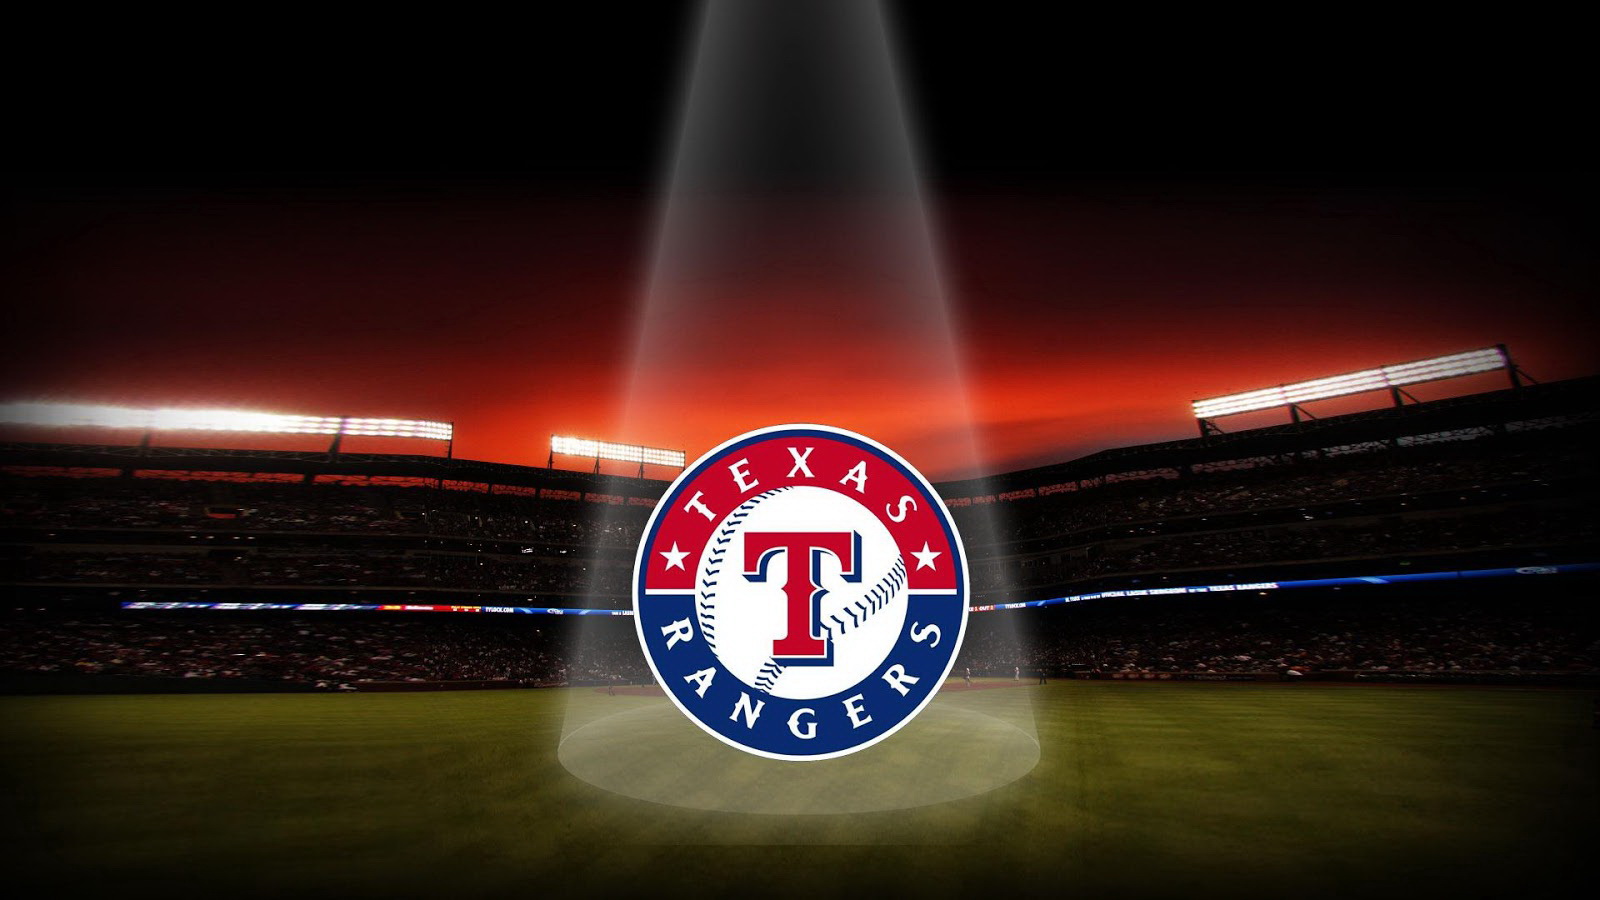 Texas Rangers iPhone Wallpapers